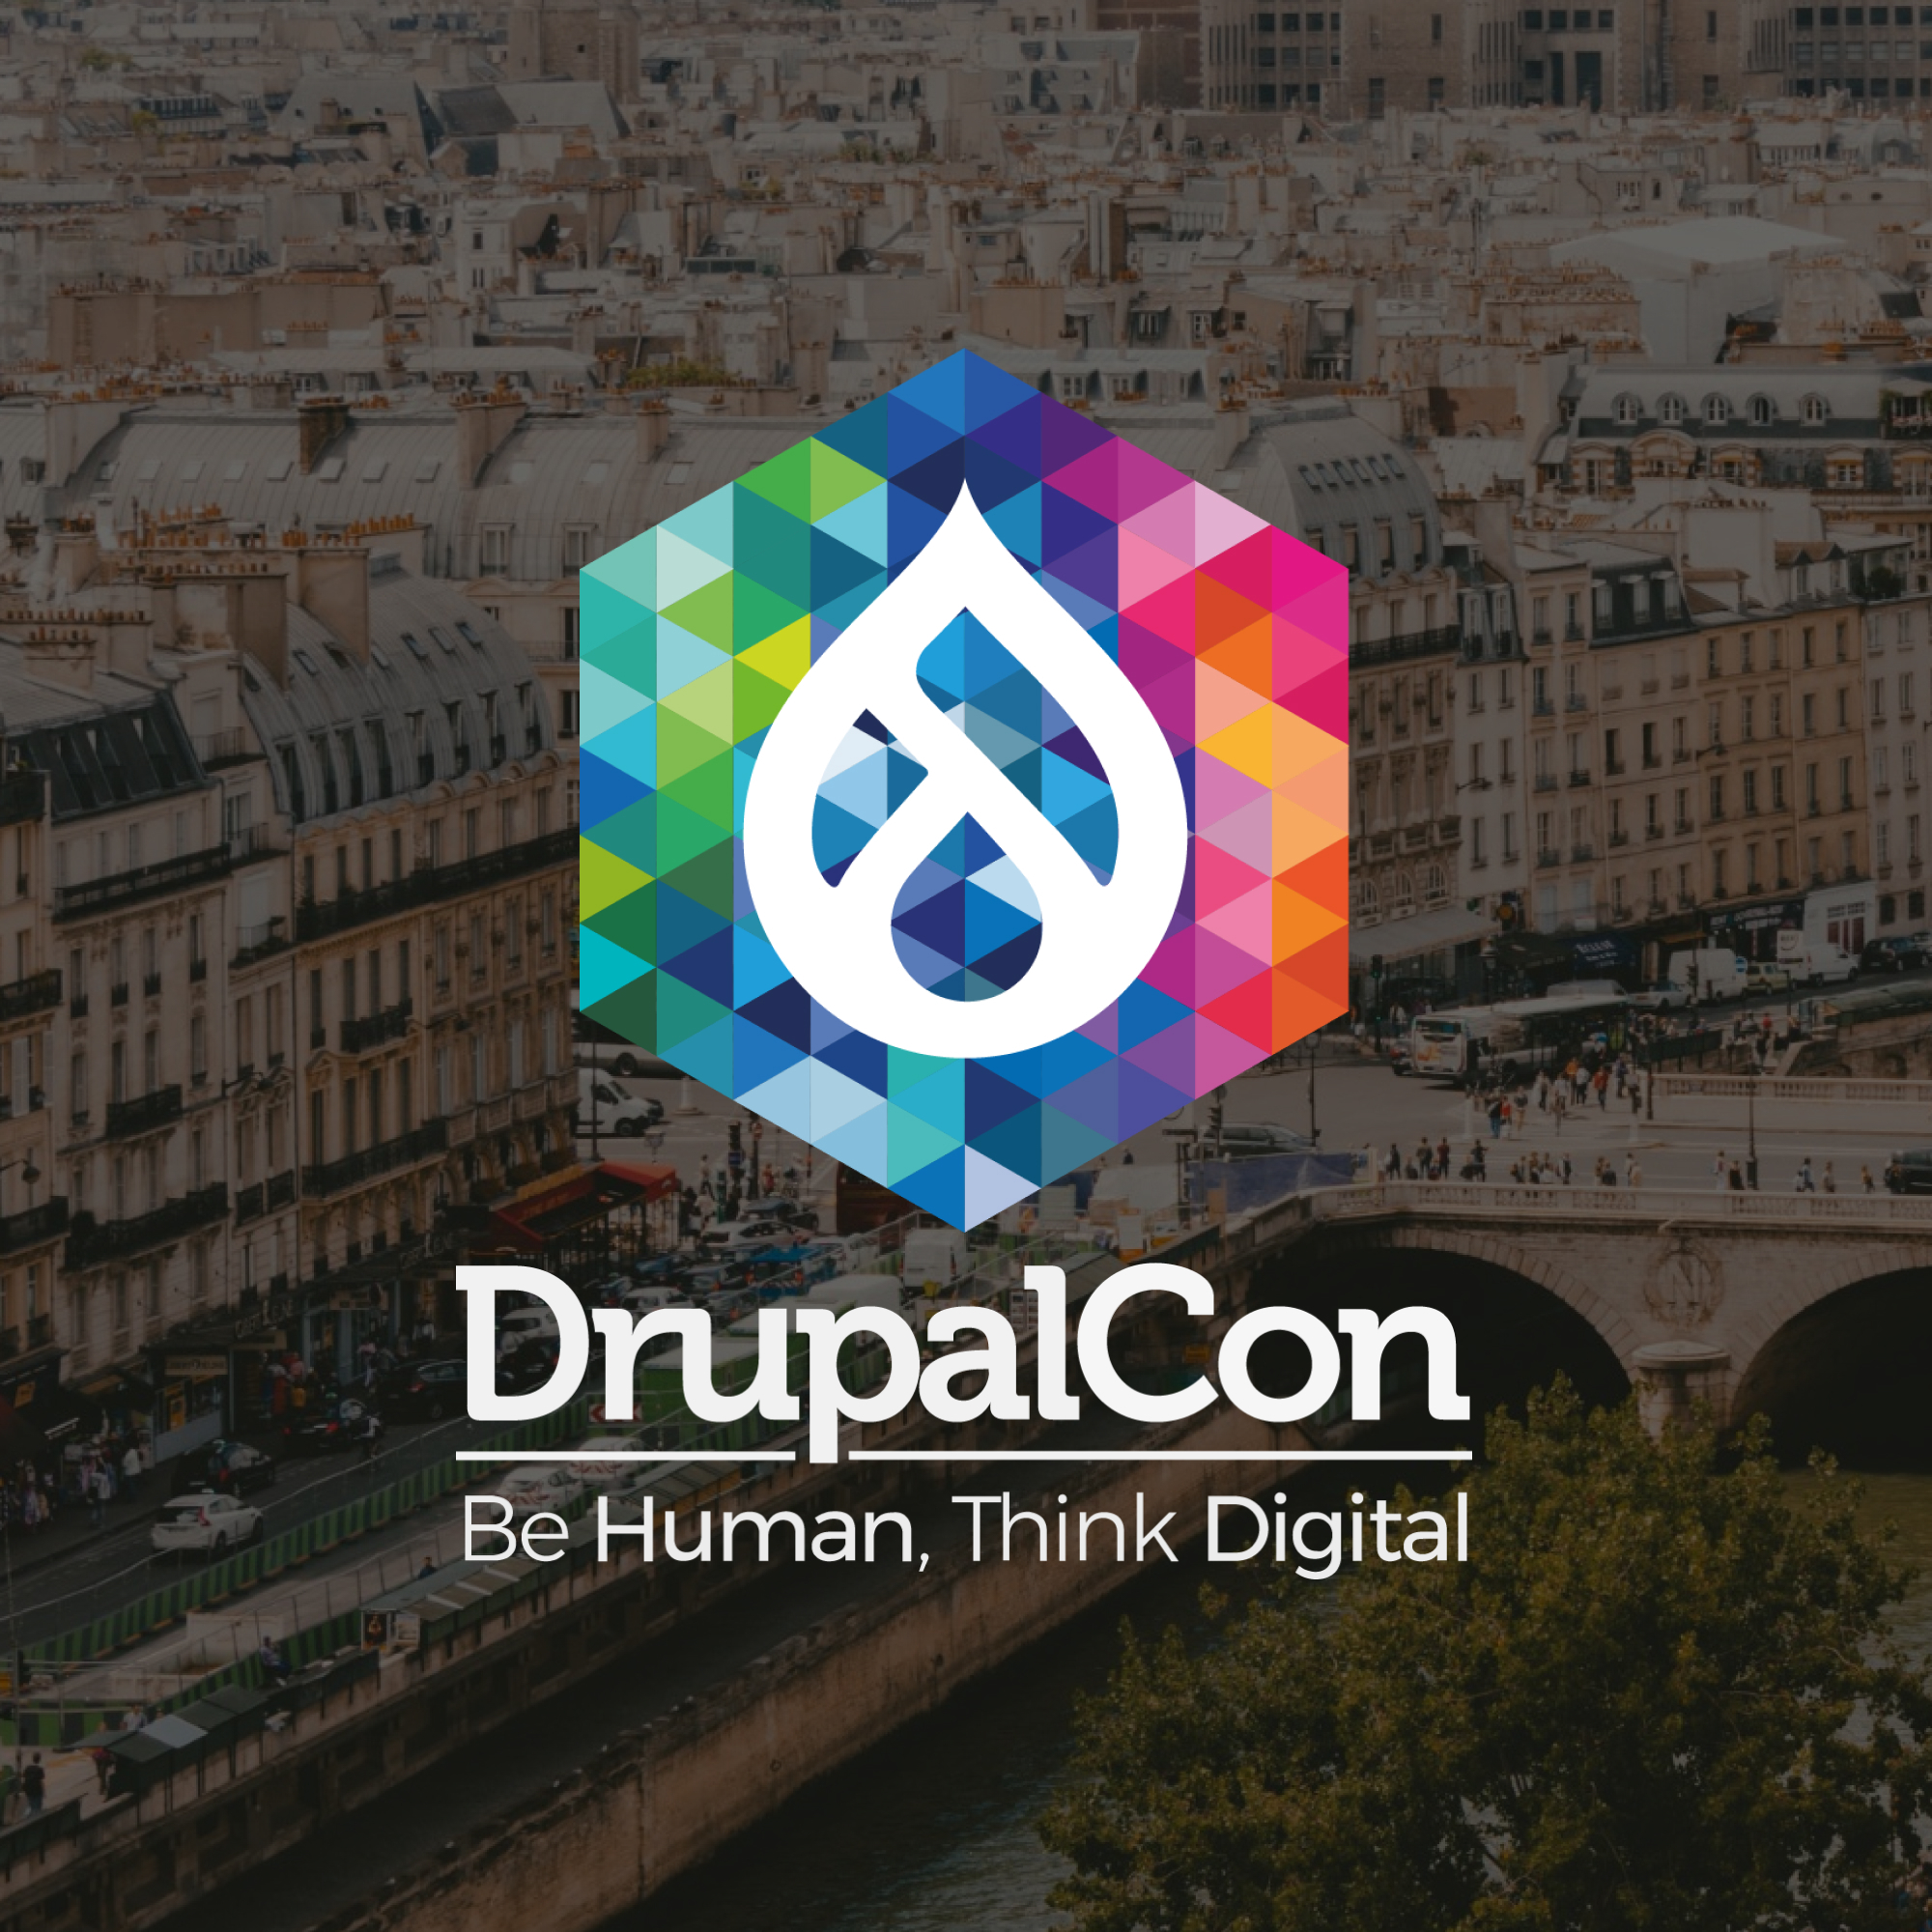 DrupalCon: Be Human, Think Digital